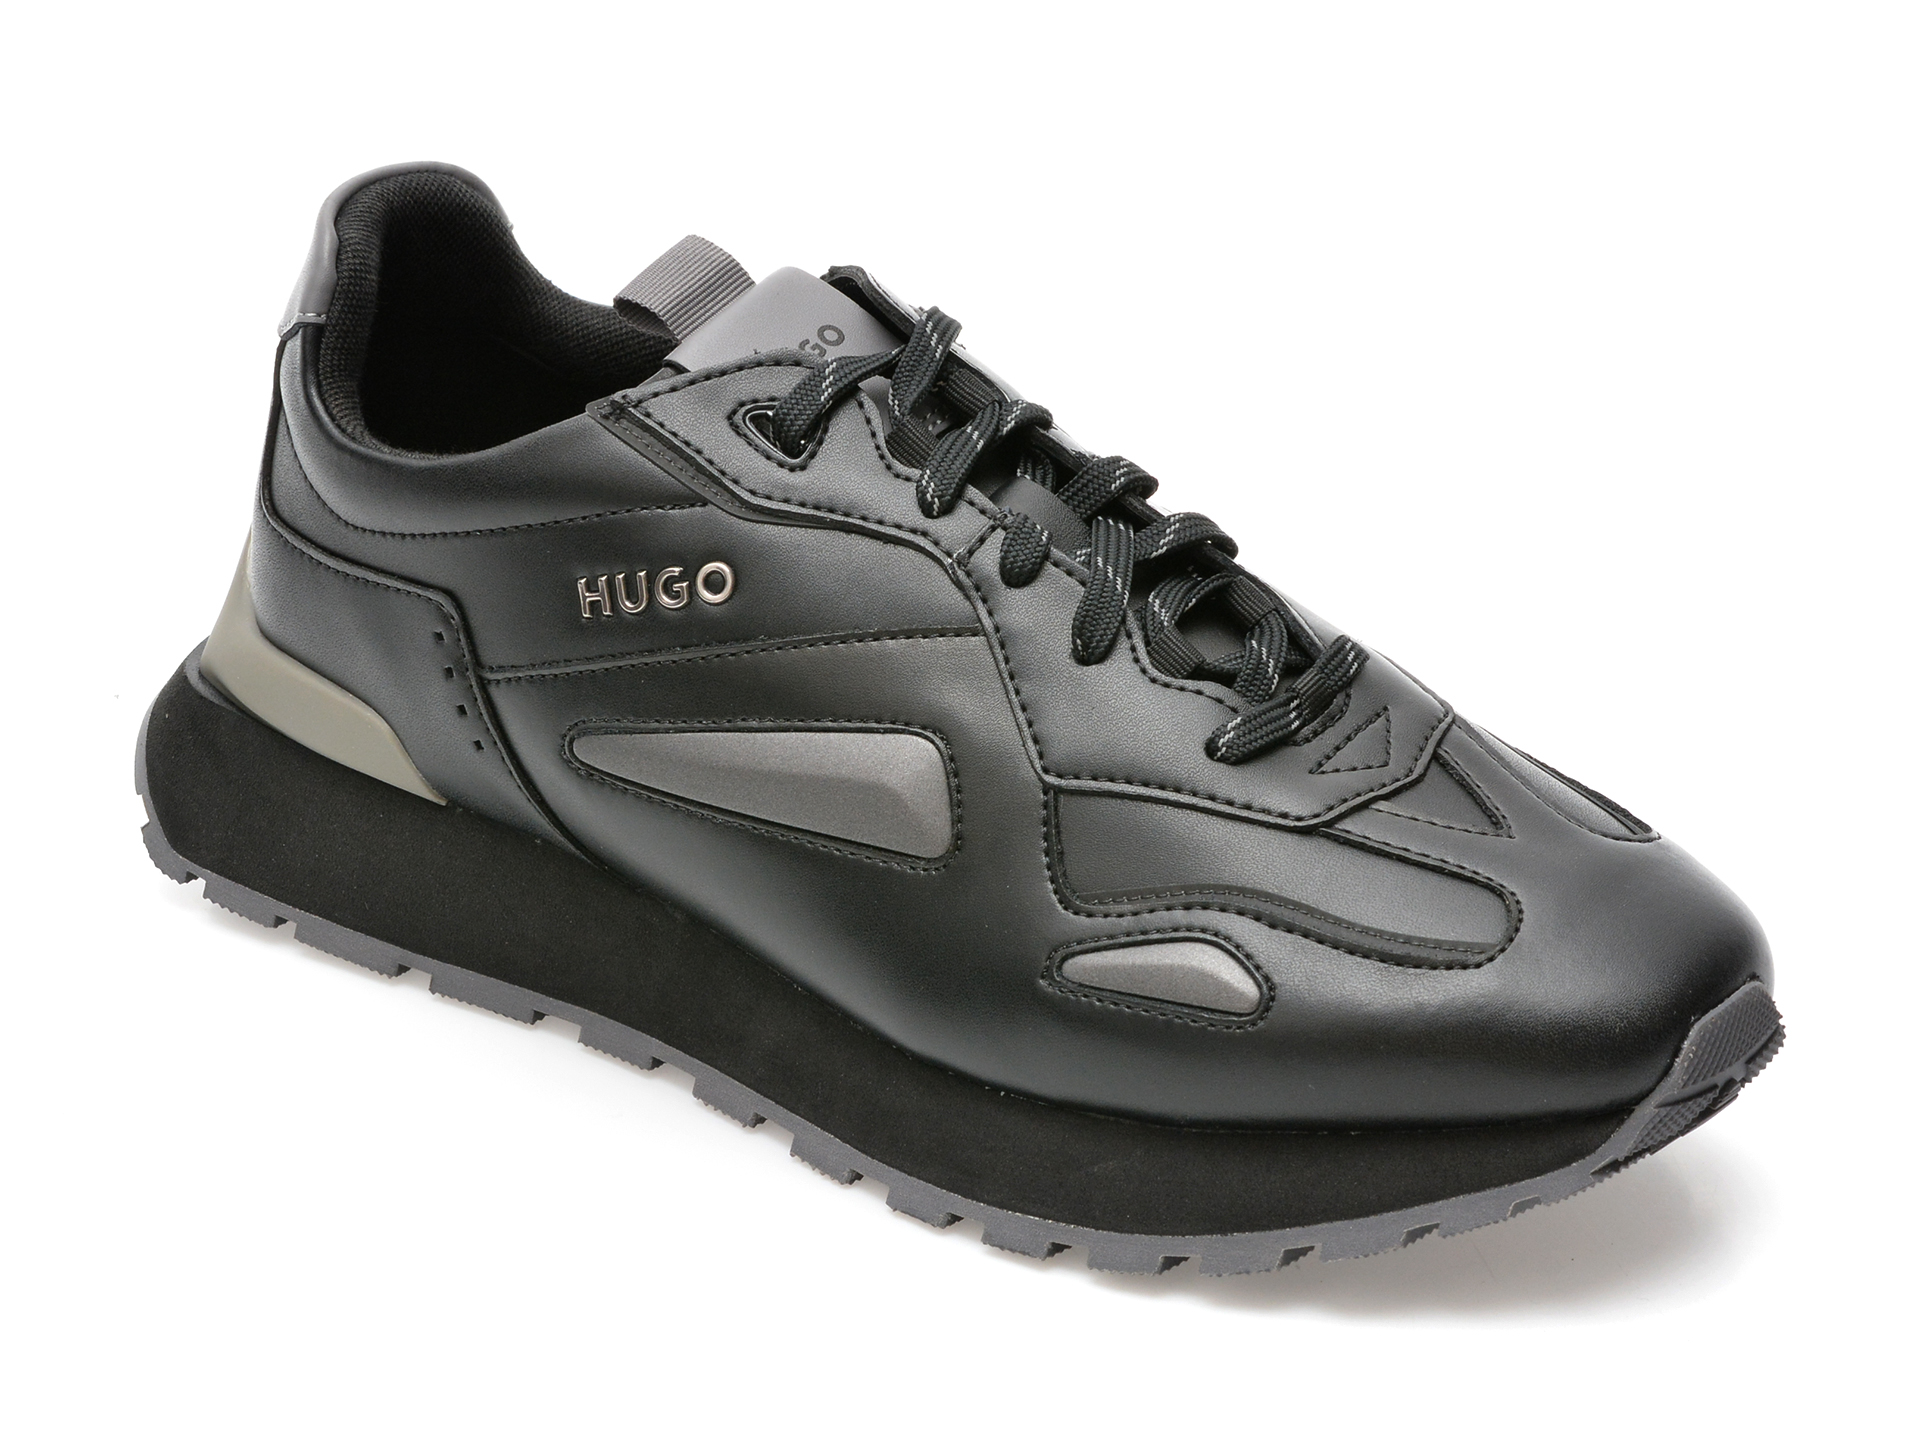 Pantofi sport HUGO BOSS negri, 462, din piele naturala /barbati/pantofi